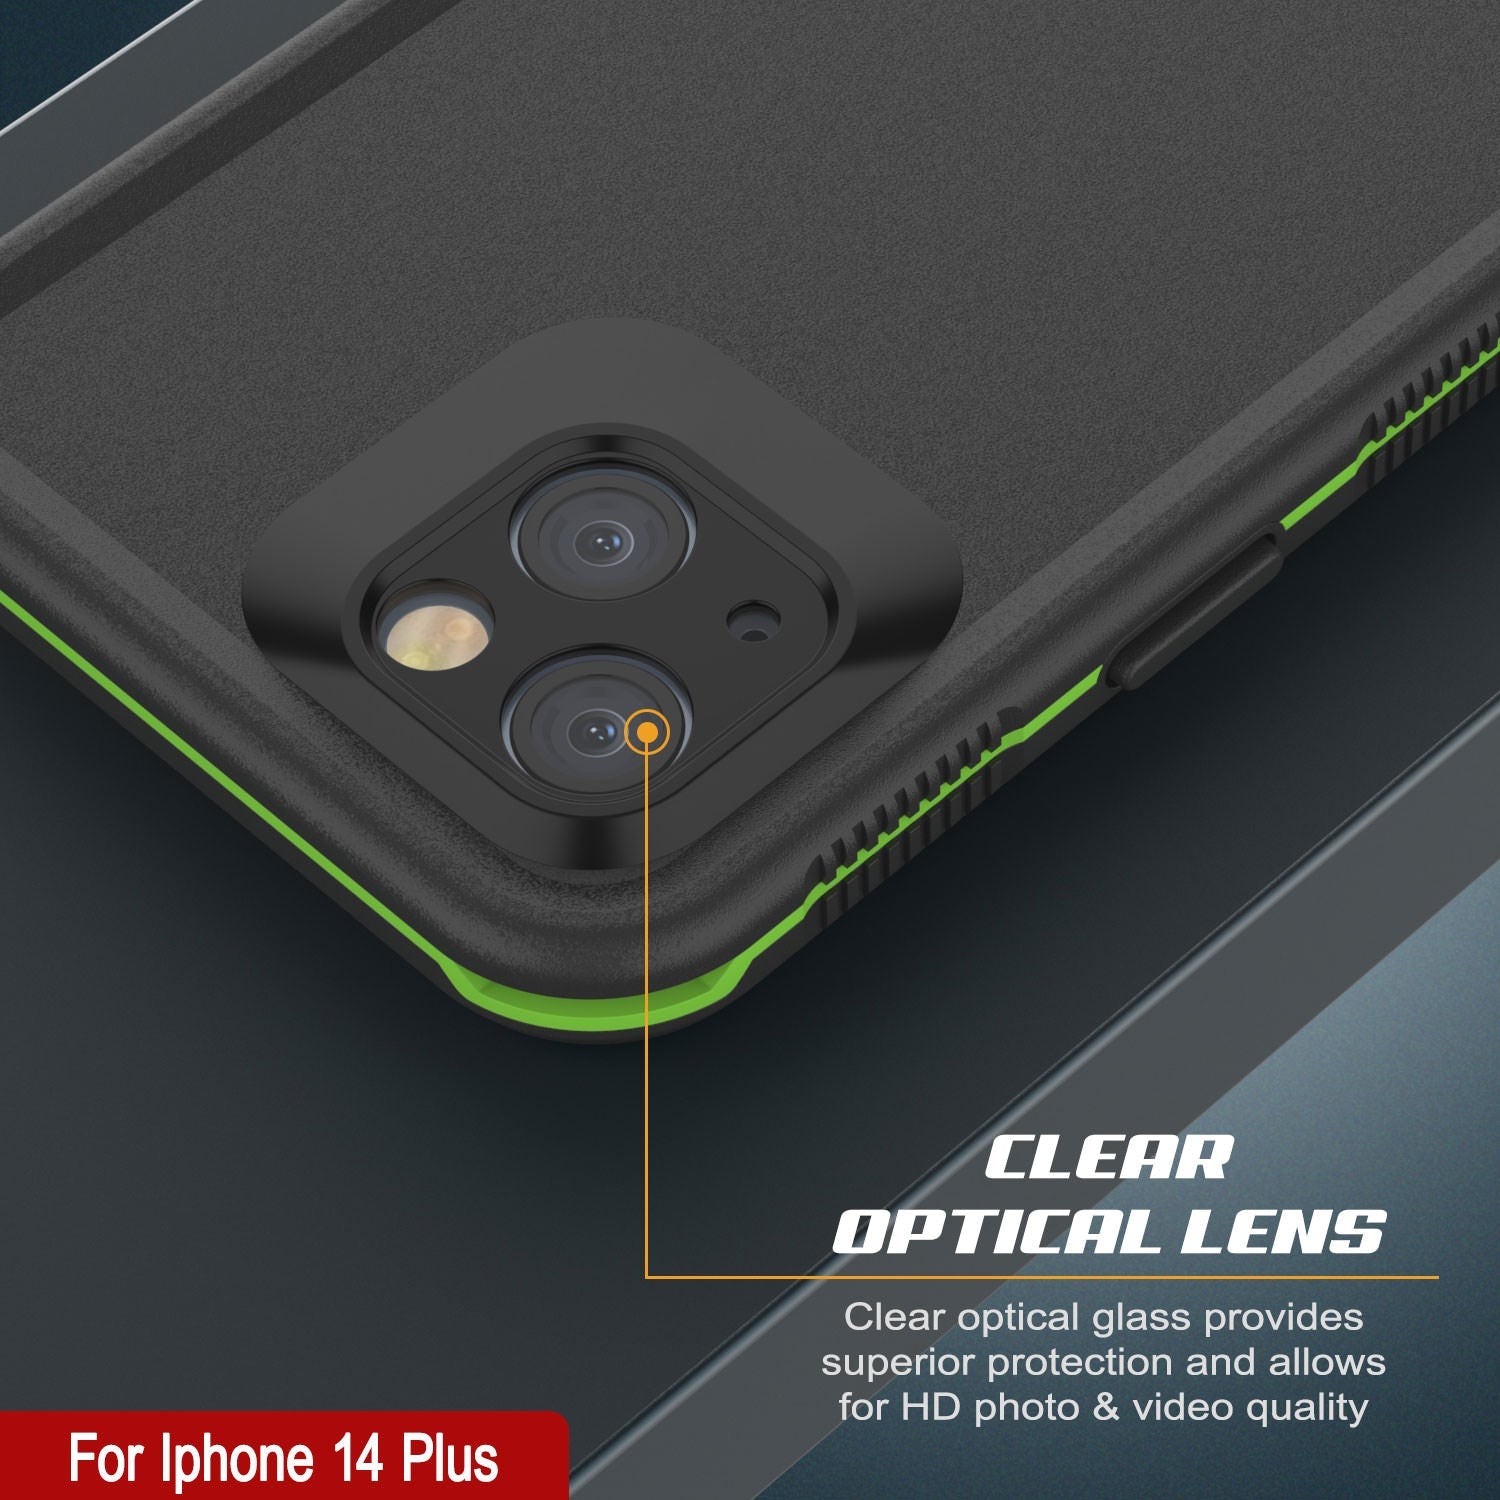 Punkcase iPhone 14 Plus Waterproof Case [Aqua Series] Armor Cover [Black-Green]